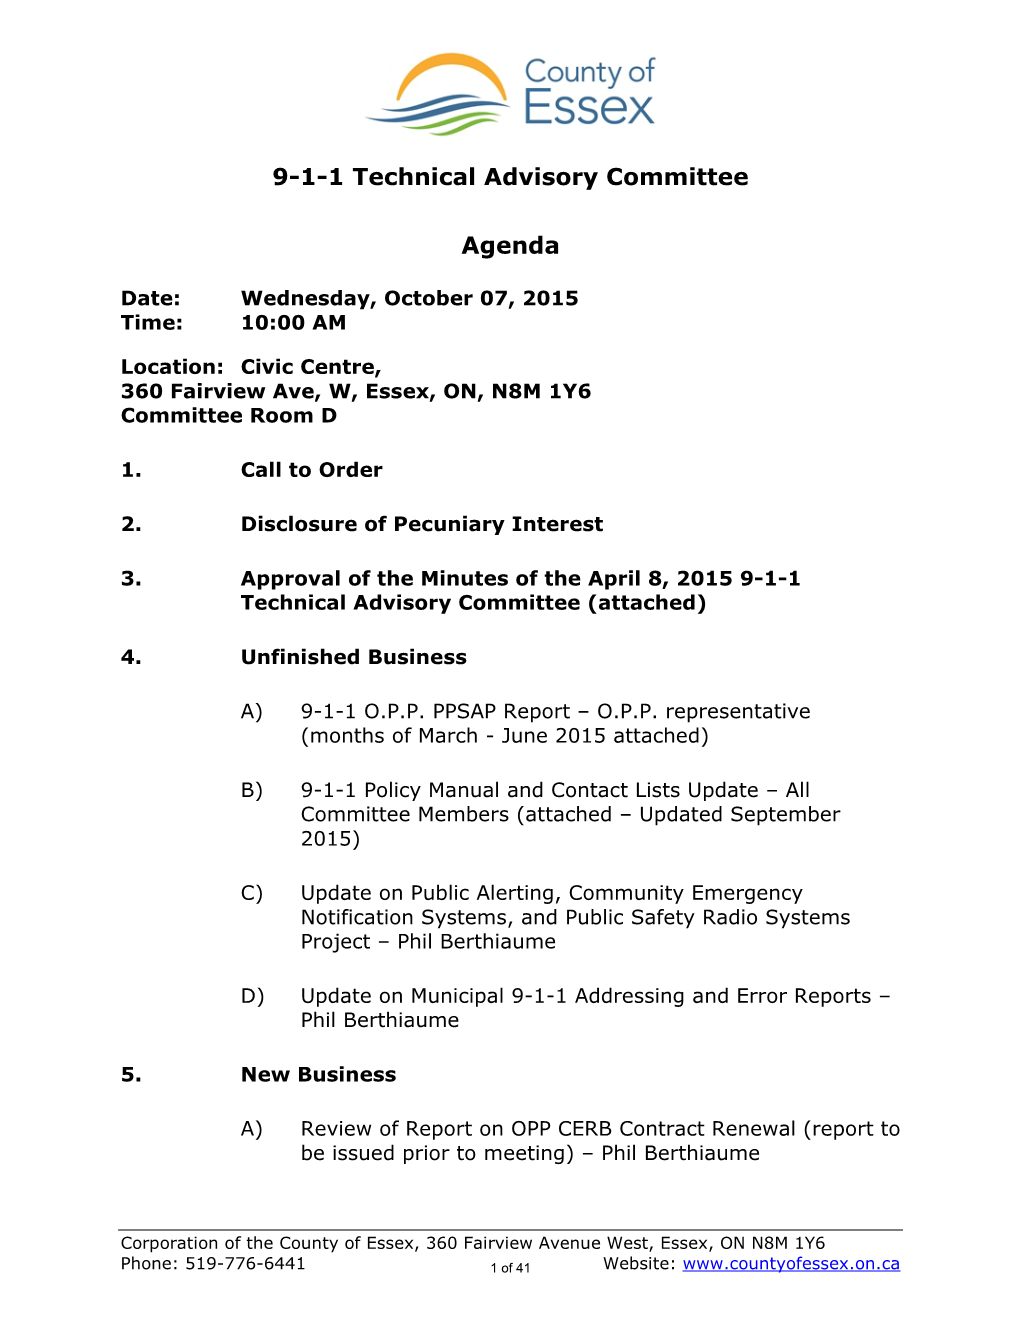 9-1-1 Technical Advisory Committee Agenda